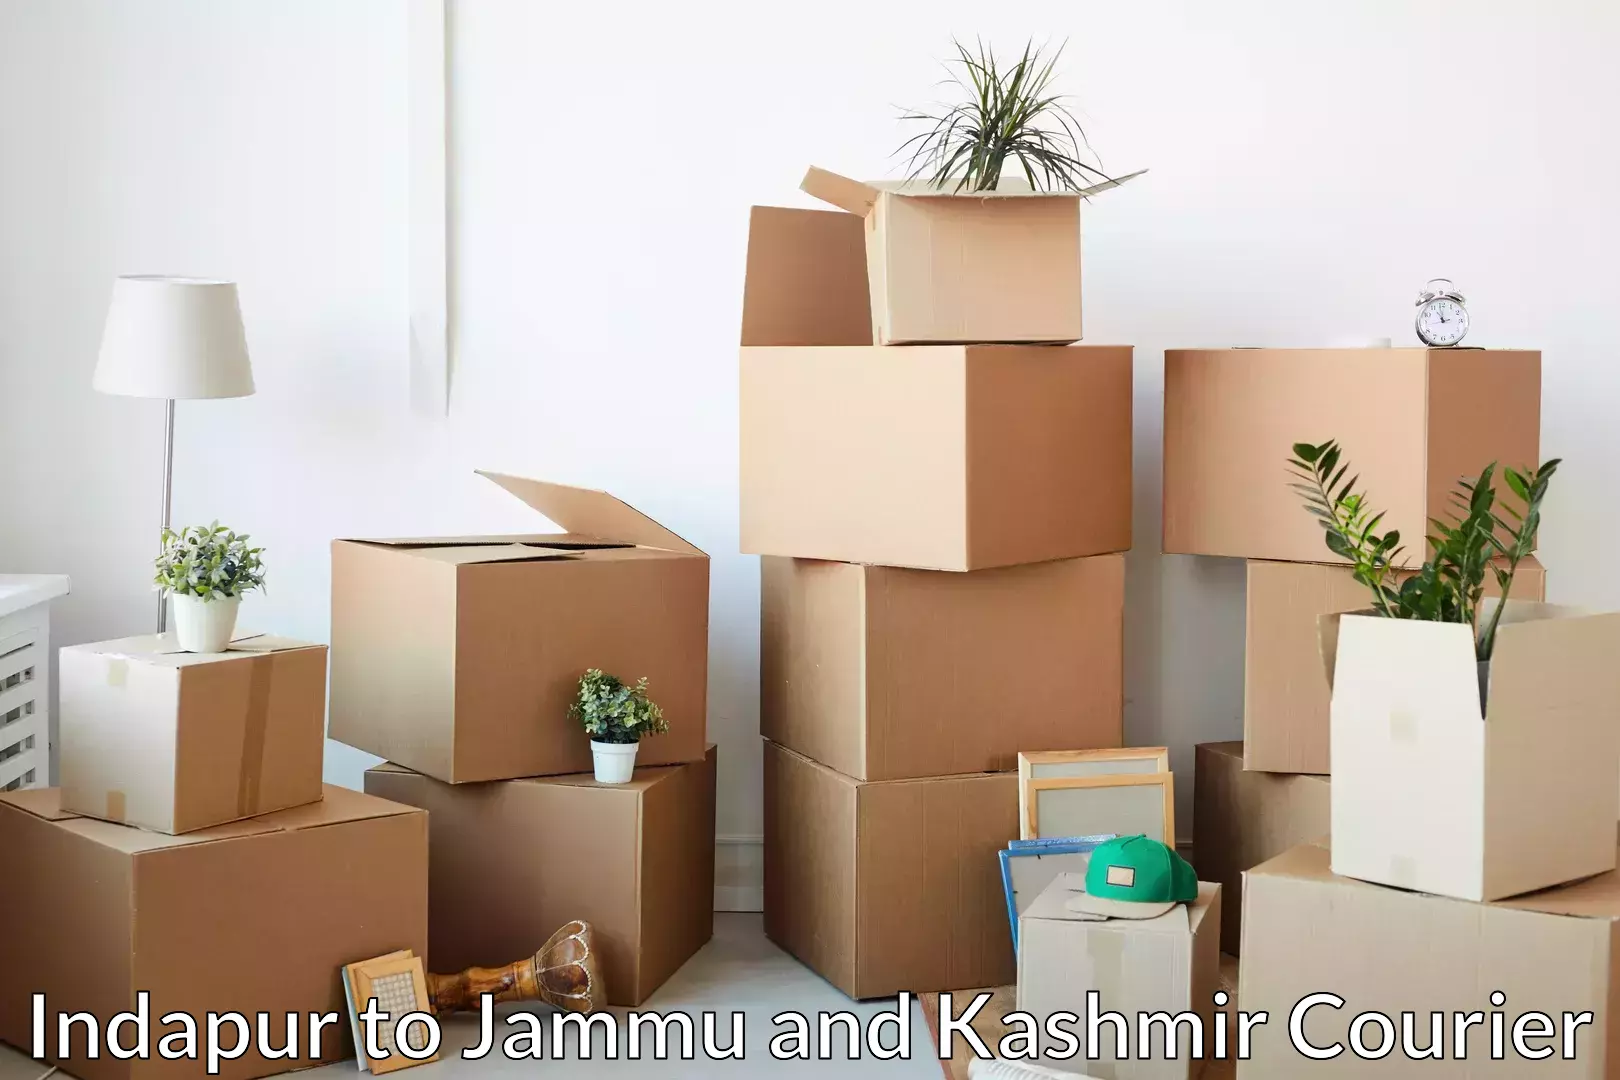 Skilled furniture movers in Indapur to Srinagar Kashmir